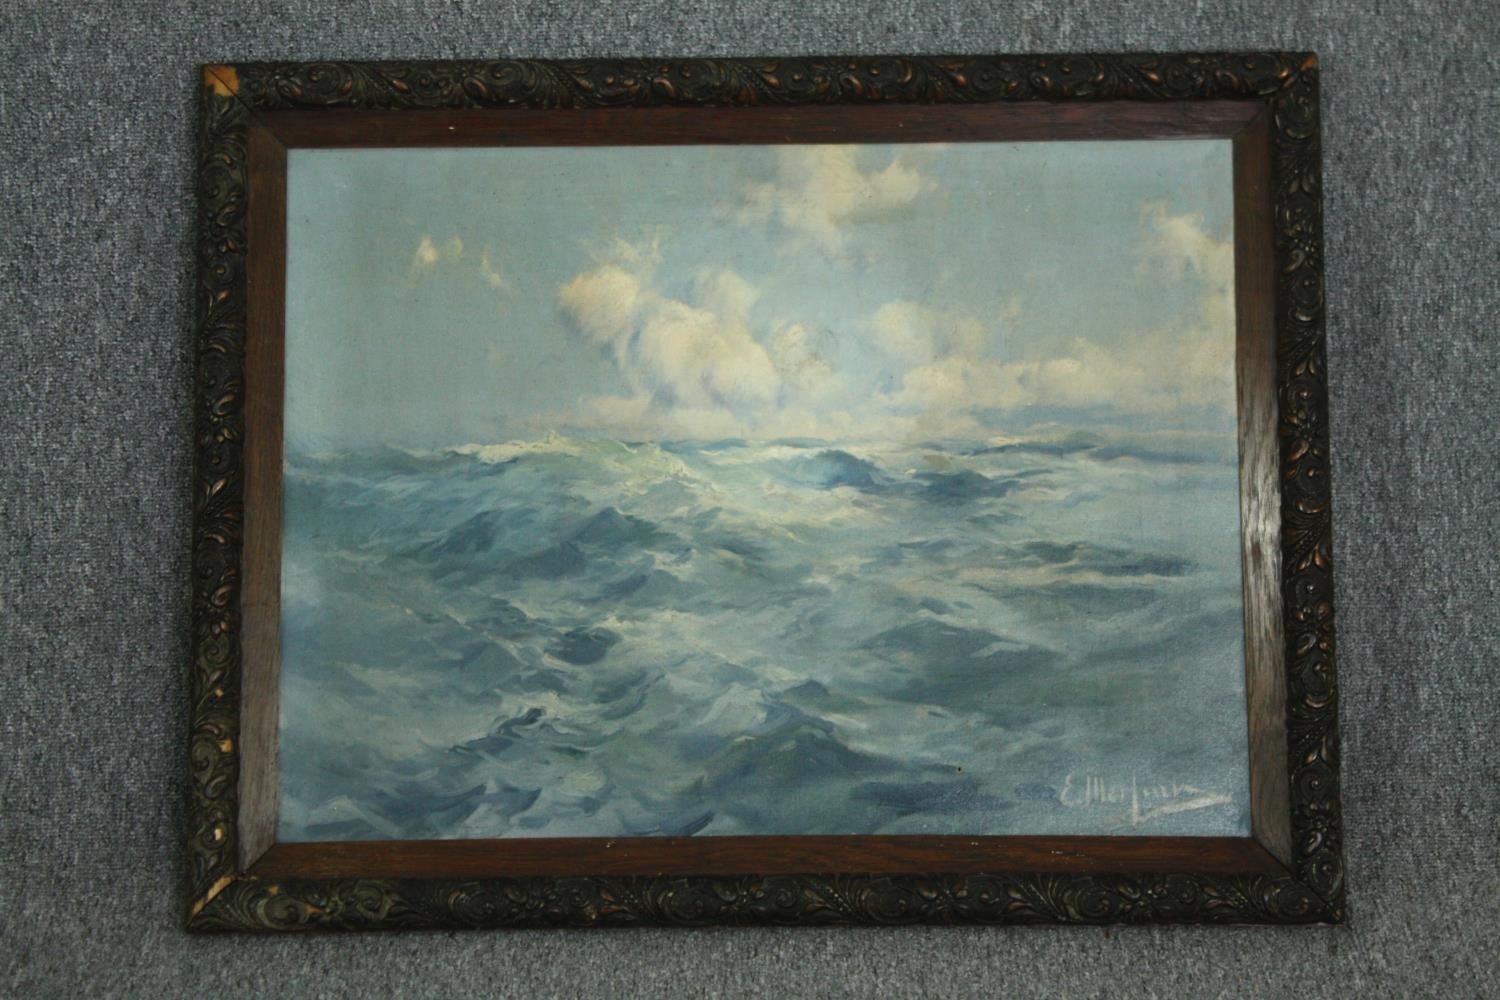 Elieu Meifren y Roig (1859-1940), oil on canvas, seascape, waves, signed. H.88 W.67cm. - Image 2 of 5